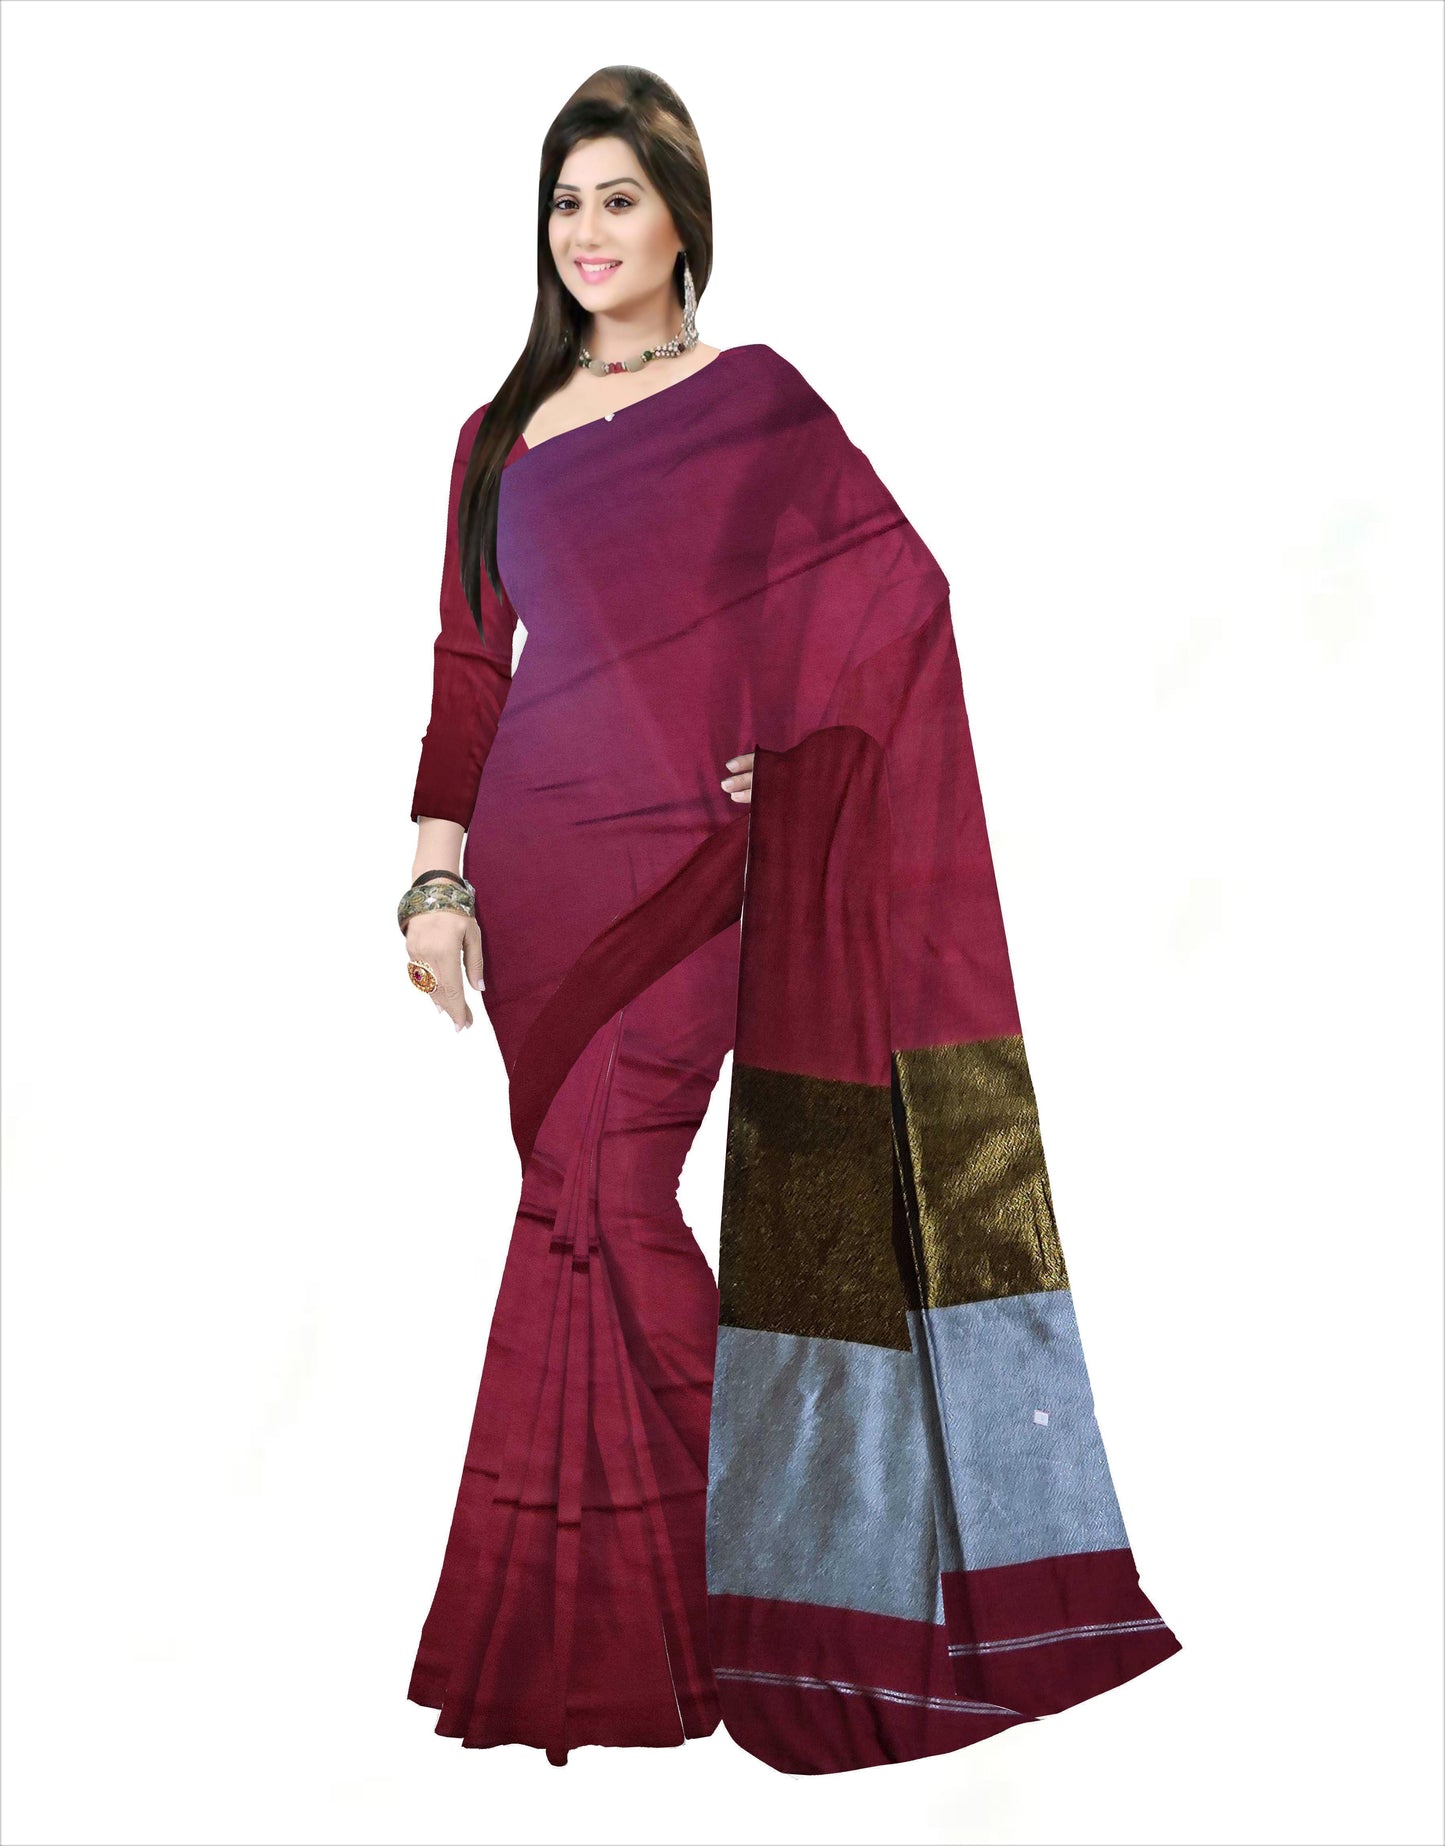 Soft  Khadi cotton sarees Maroon color